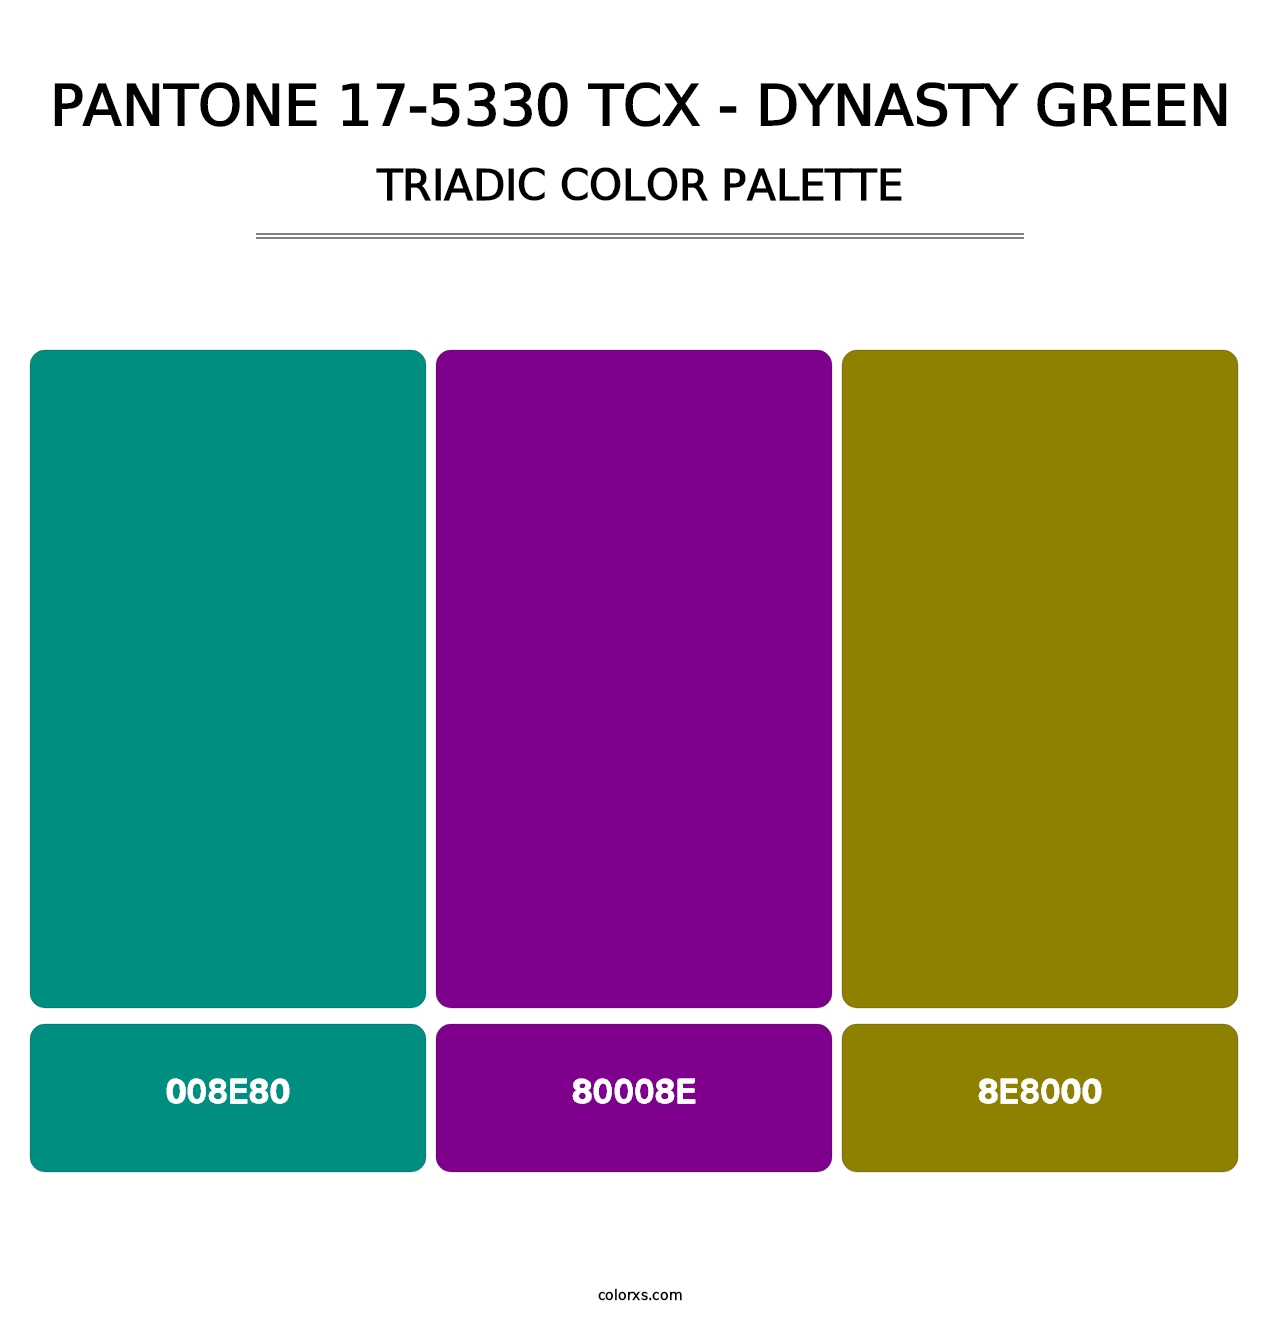 PANTONE 17-5330 TCX - Dynasty Green - Triadic Color Palette